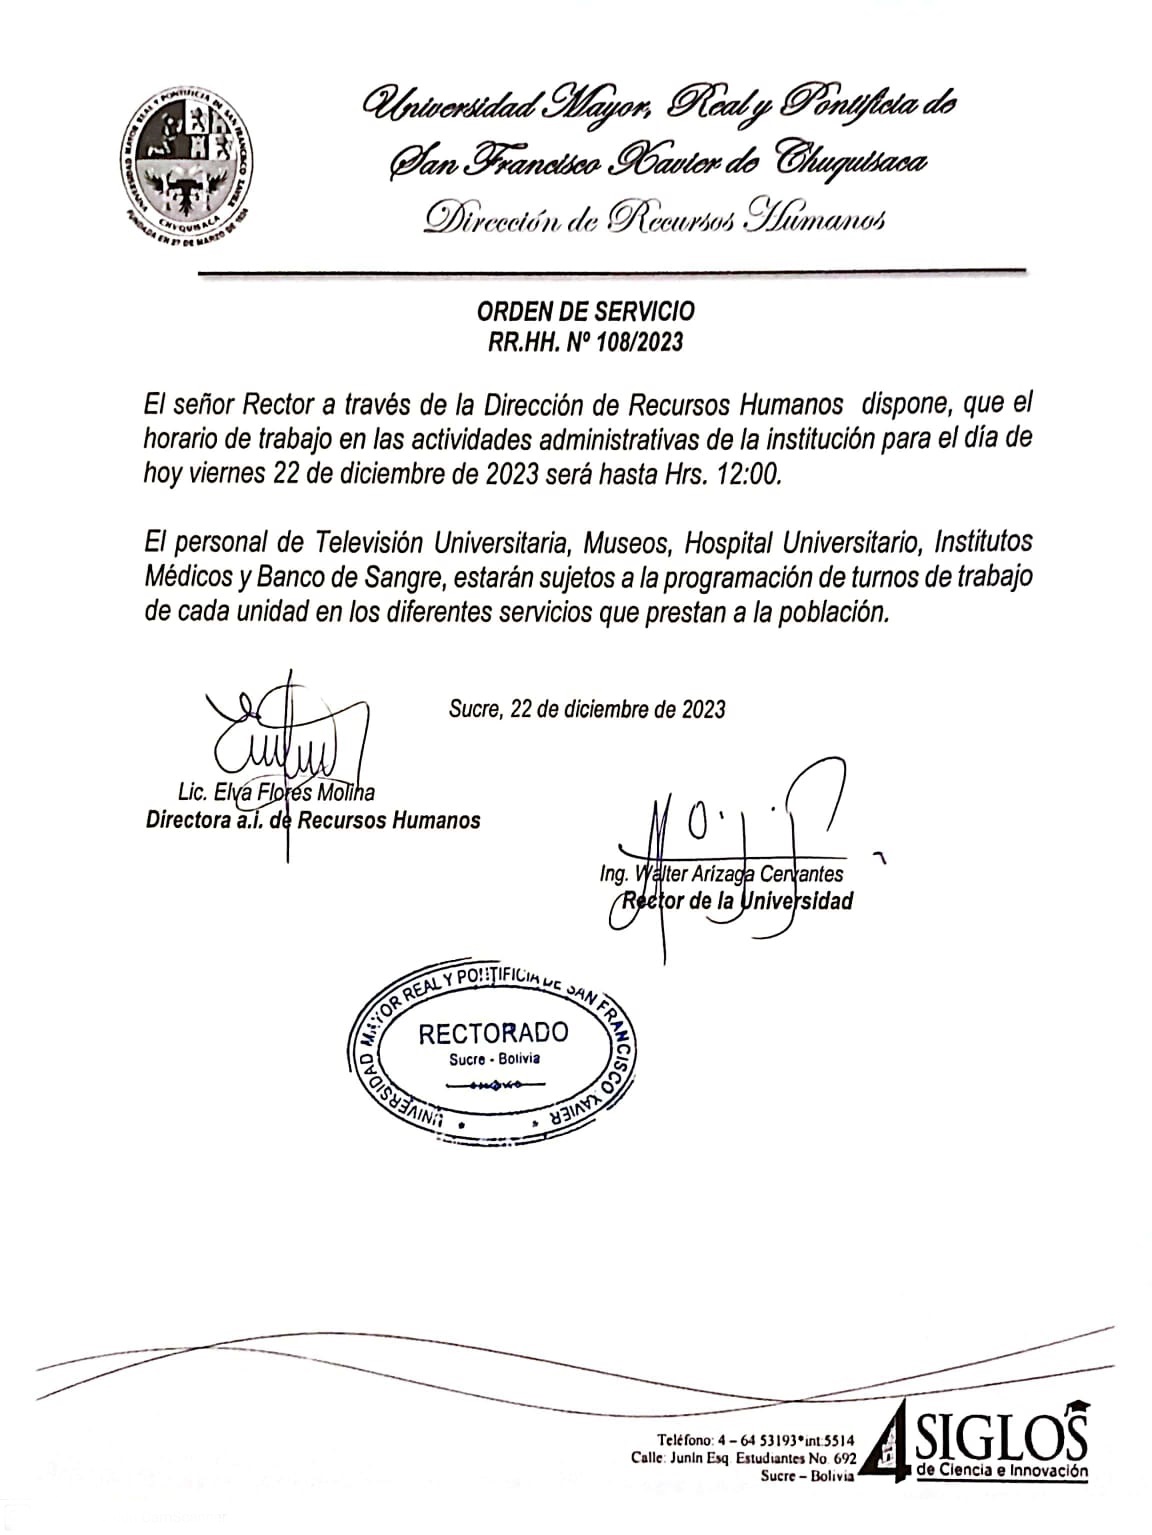 ORDEN DE SERVICIO RR.HH. Nº 108/2023, HORARIO DE TRABAJO ADMINISTRATIVO.